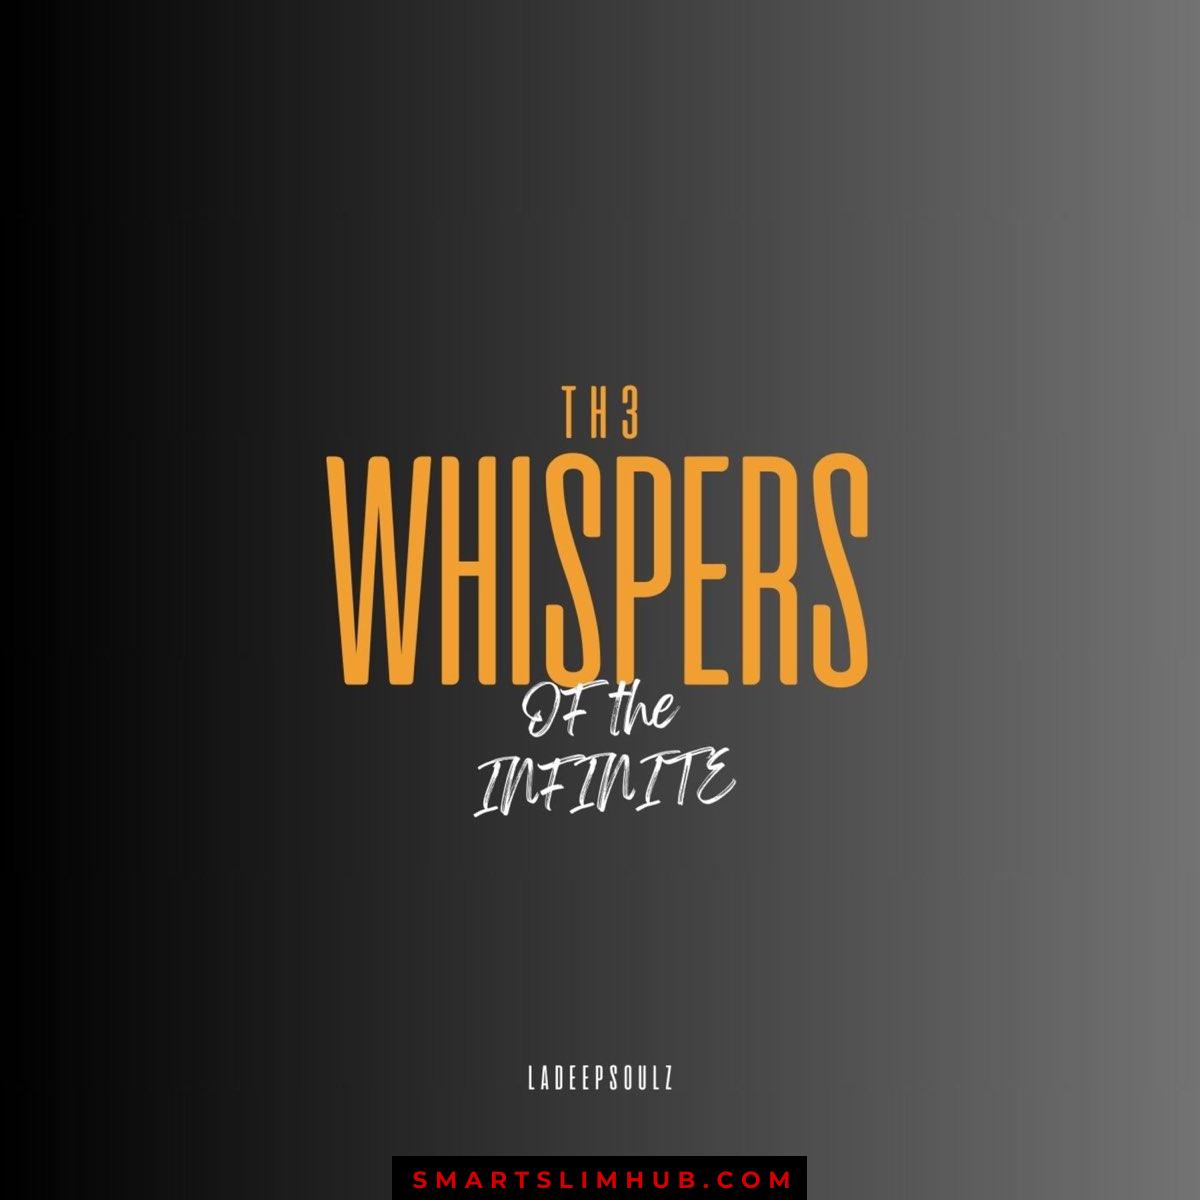 LaDeepsoulz – The Whispers of The Infinite Album